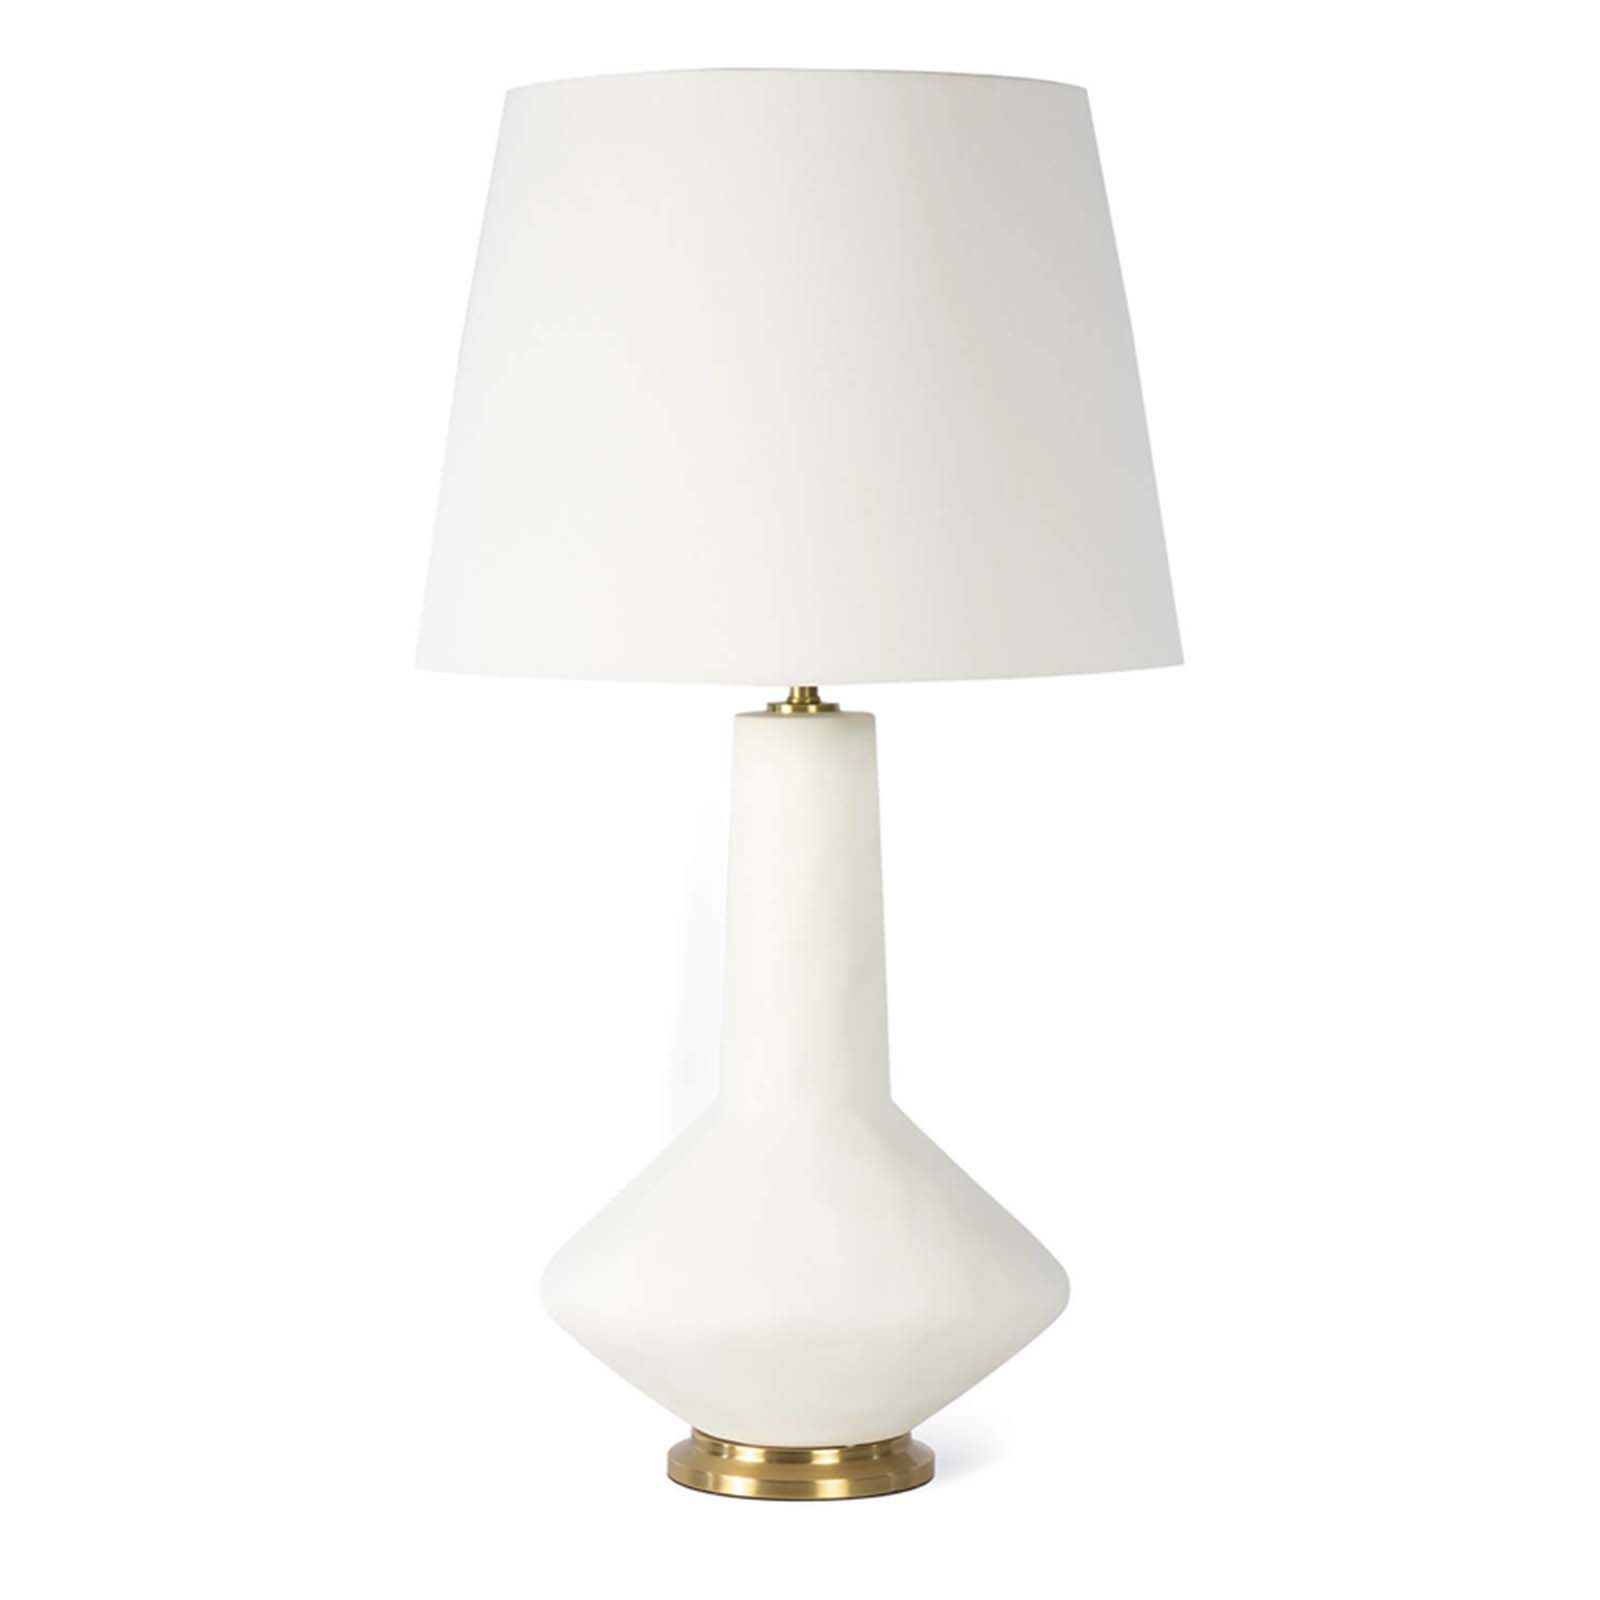 Kayla Table Lamp